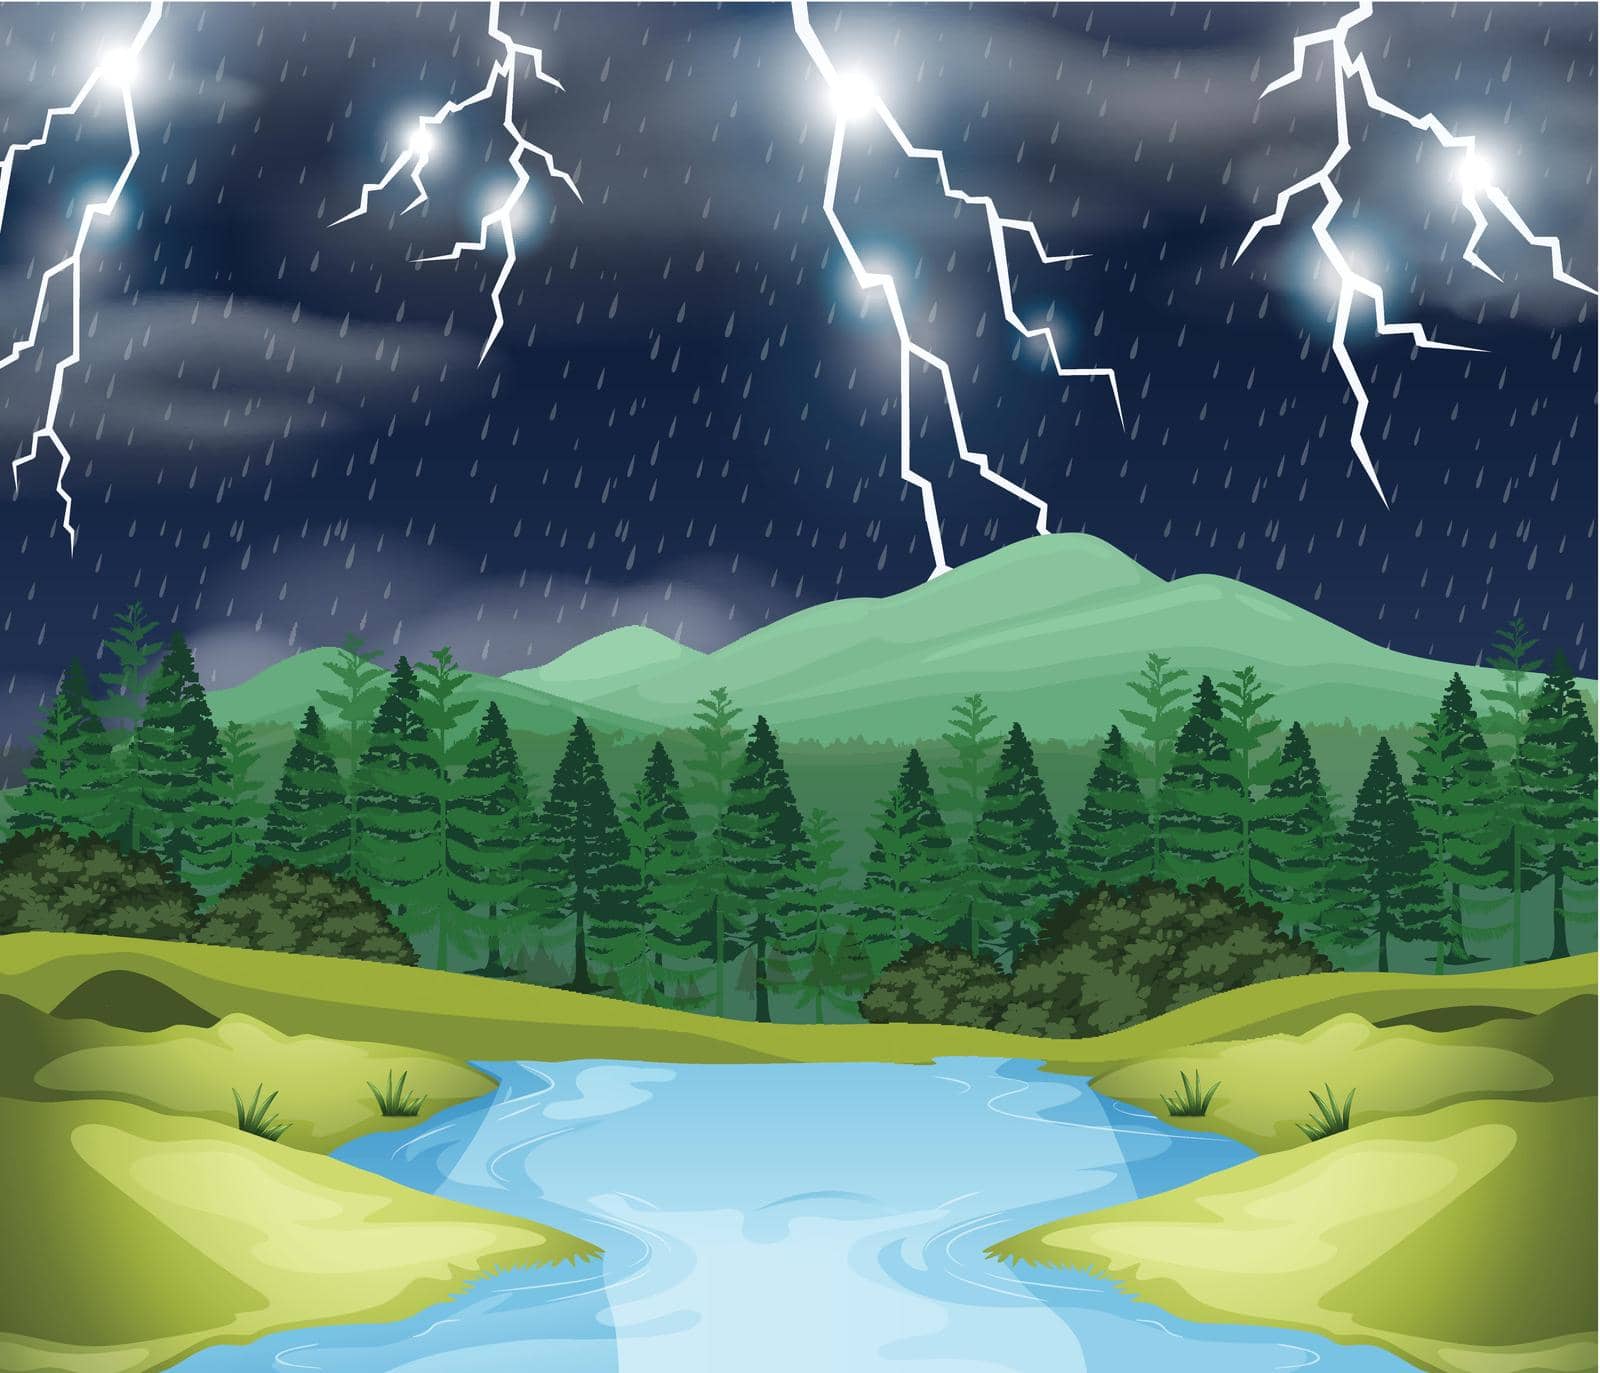 Storm night nature scene illustration